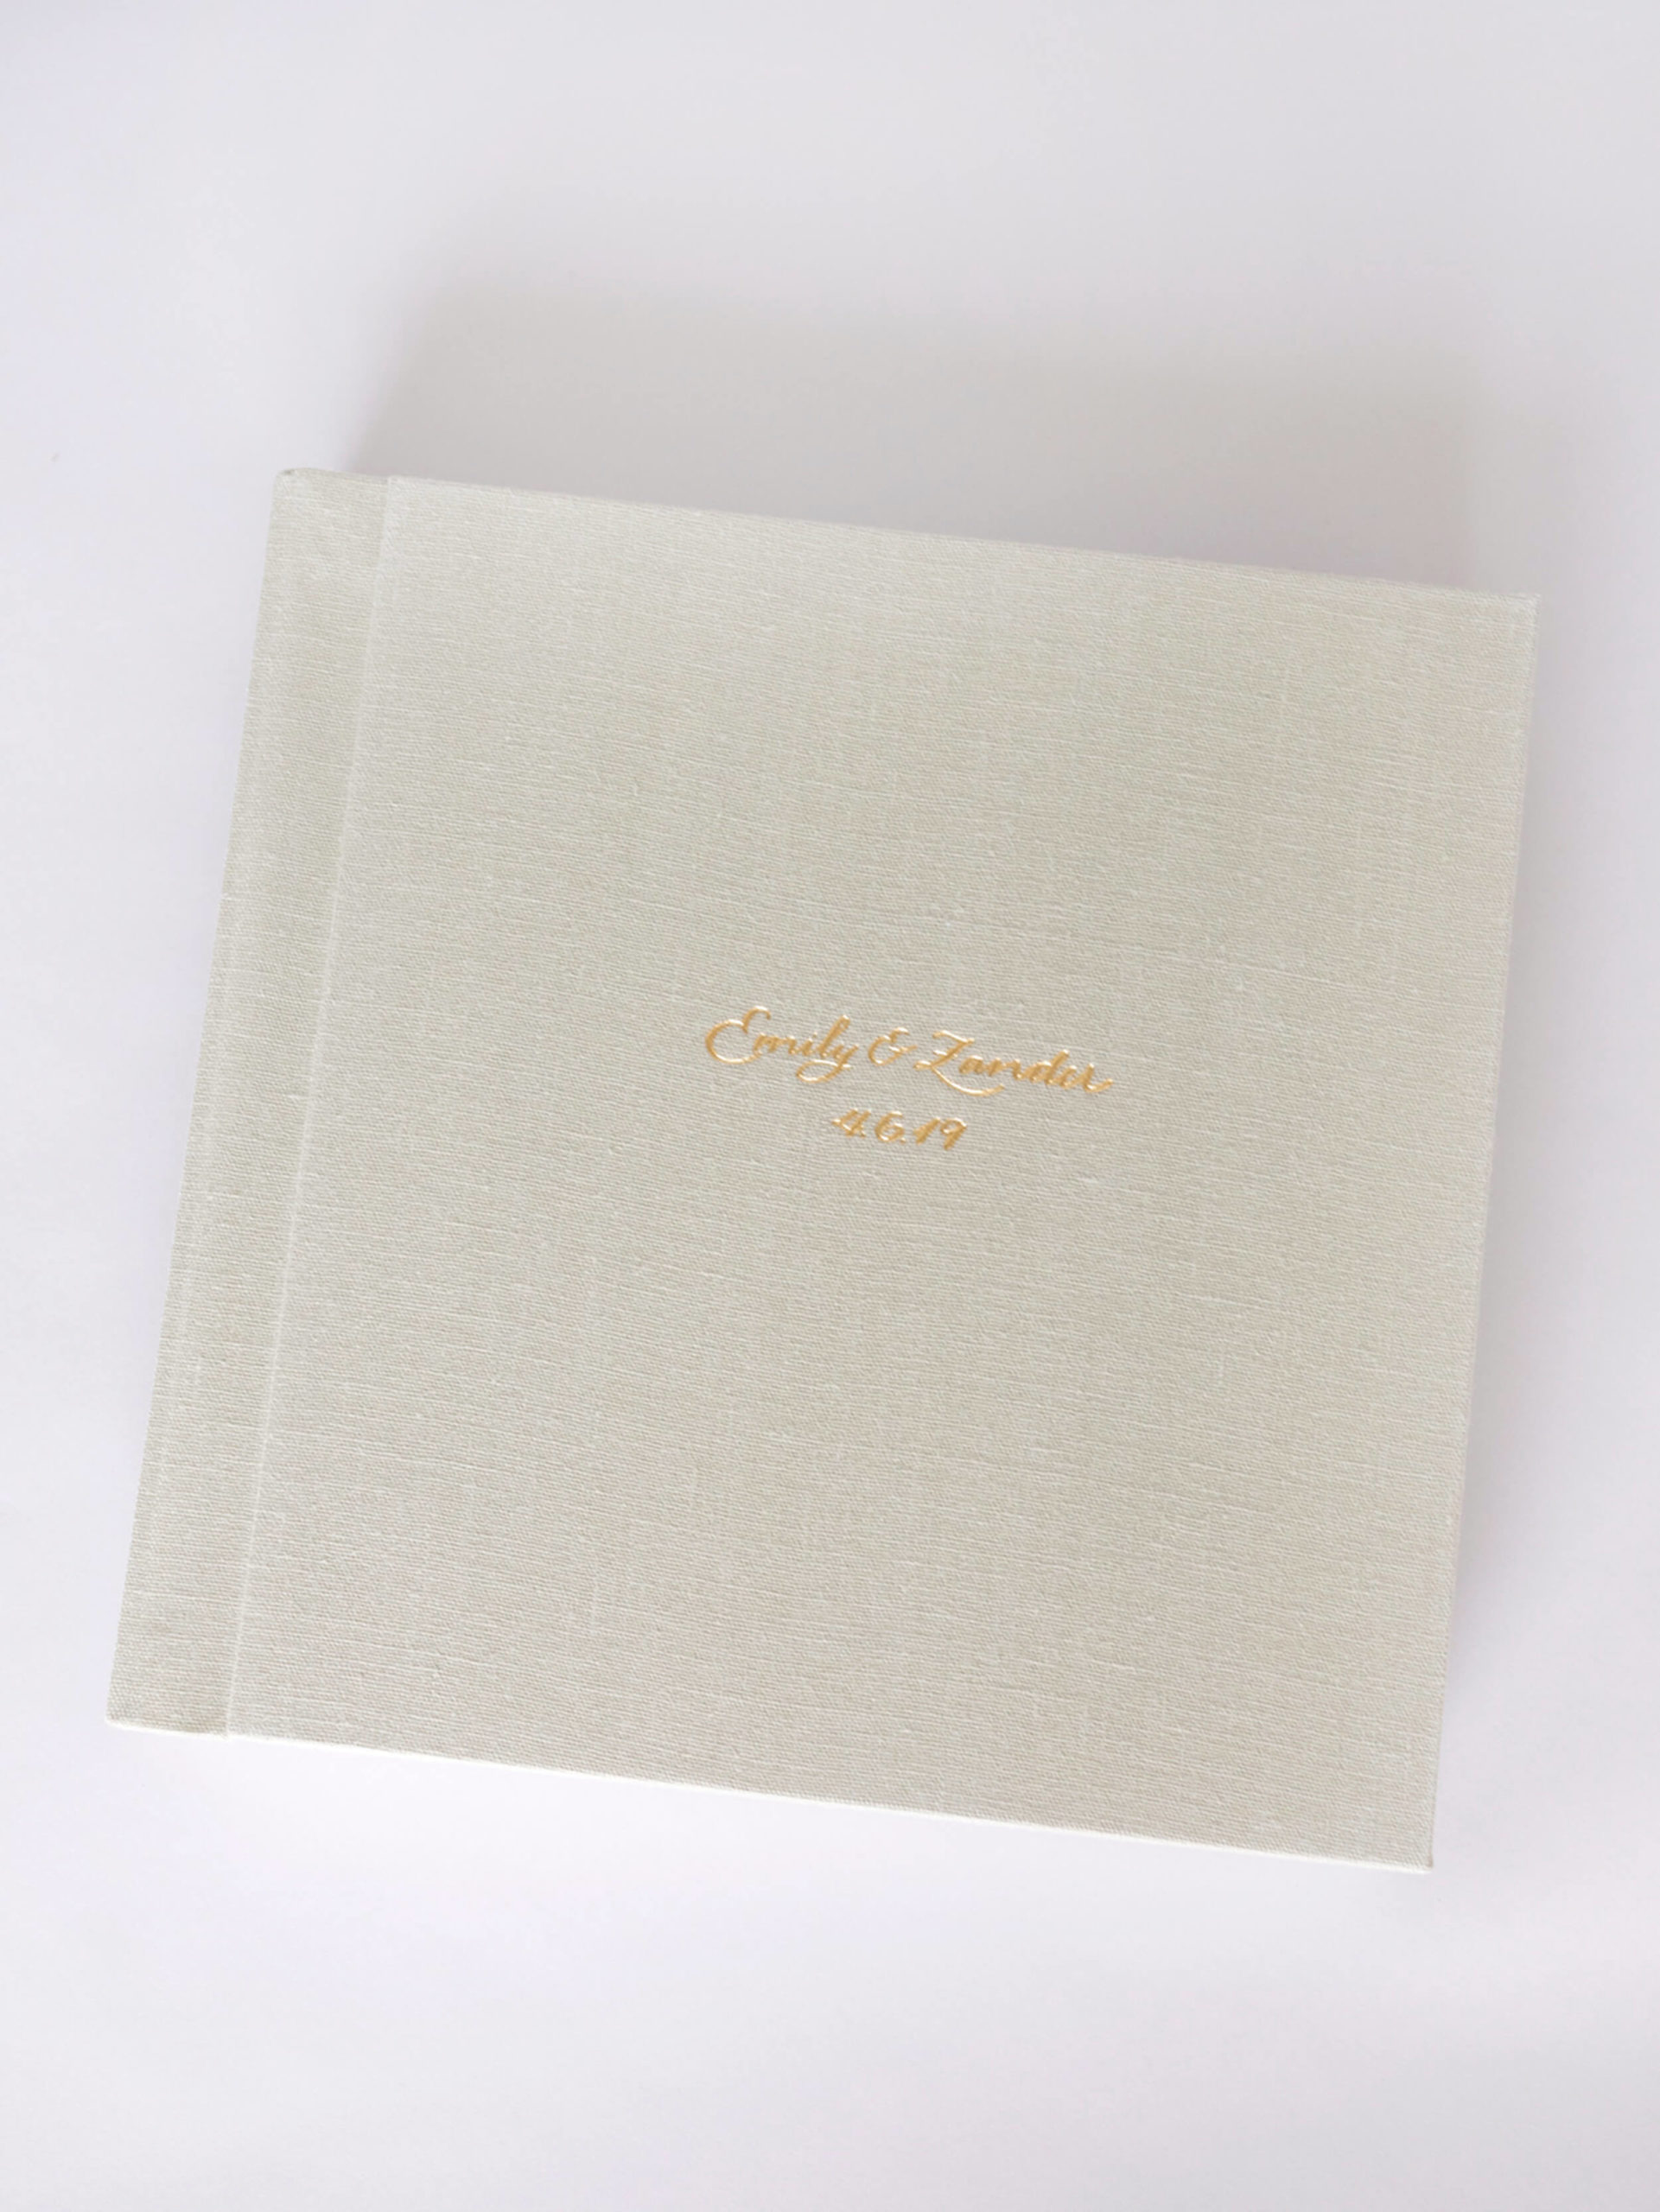 custom wedding album by Priscilla Foster